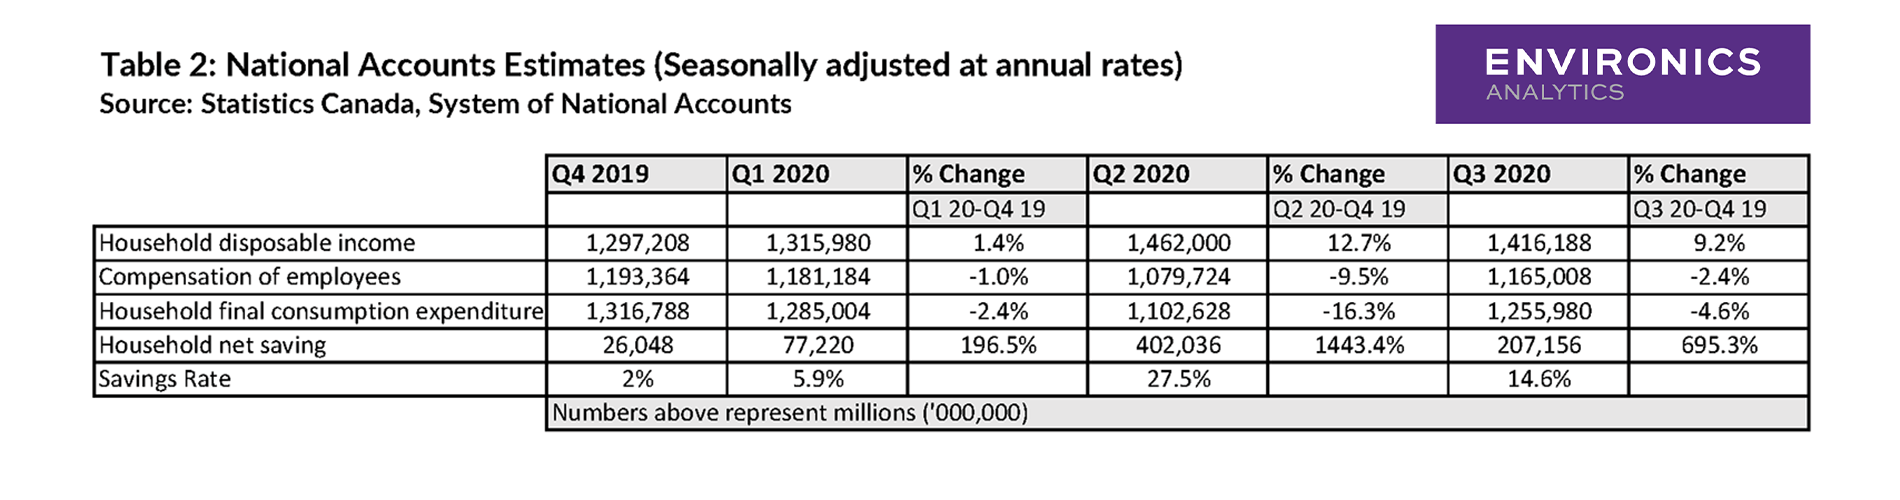 Table 2 National Accounts Estimates 2020 seasonally adjusted at annual rates